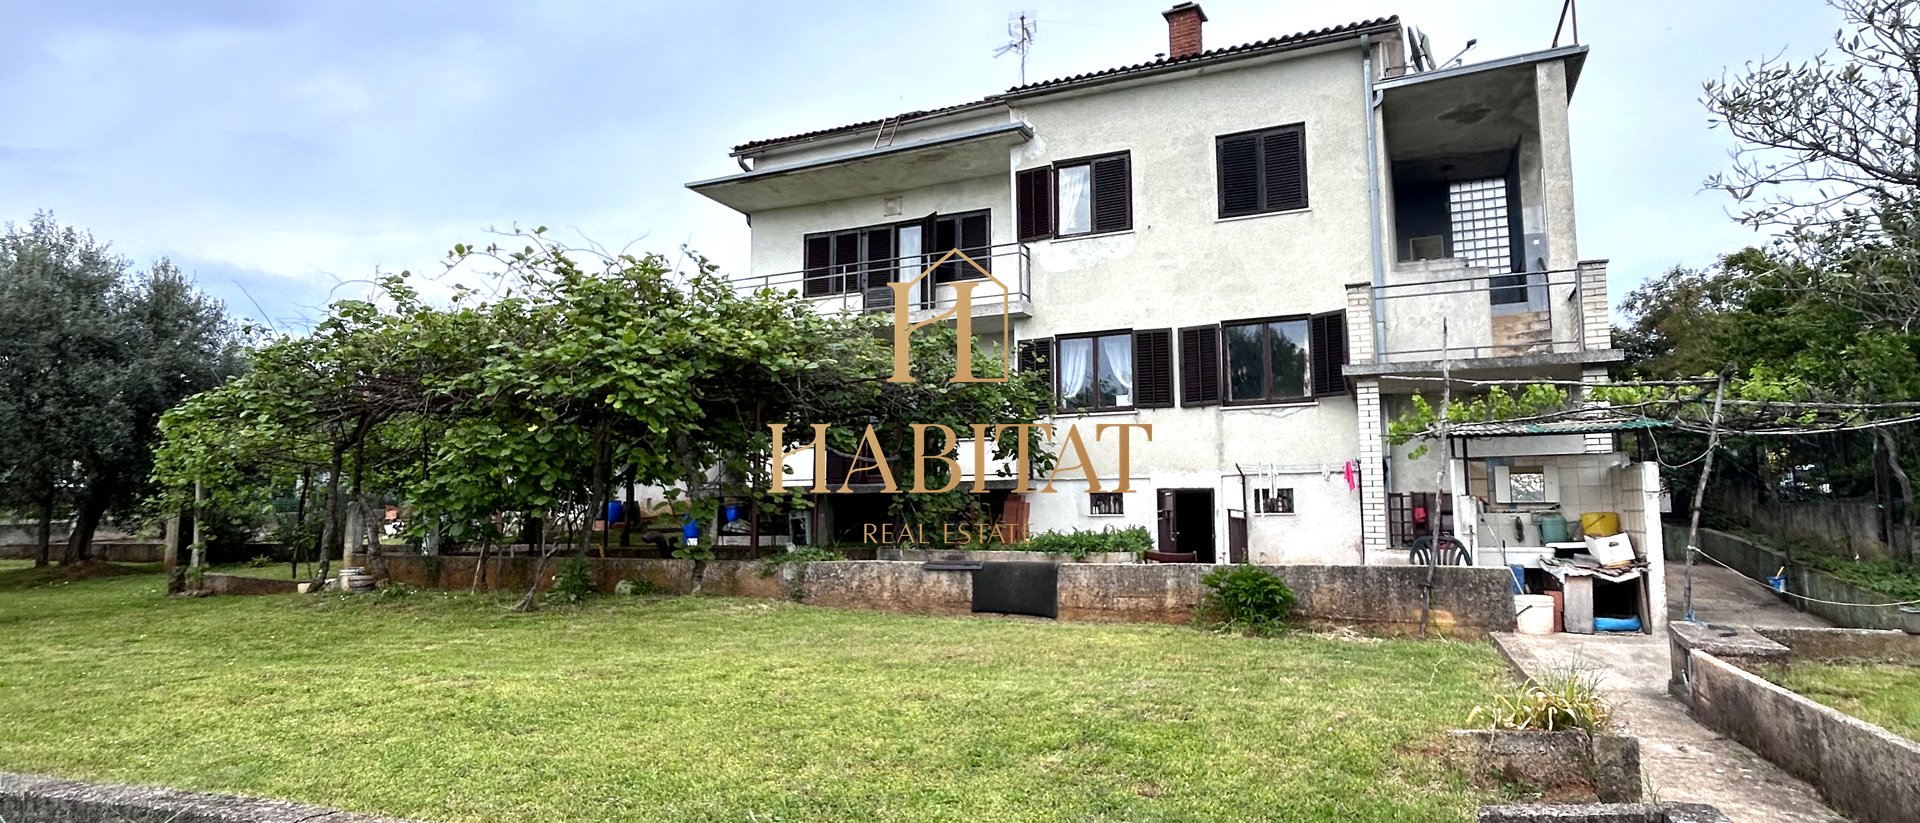 Istria, Umago, Marija Na Krasu, casa 420m2 con terrazze, giardino 1644m2, 2 garage, vista mare